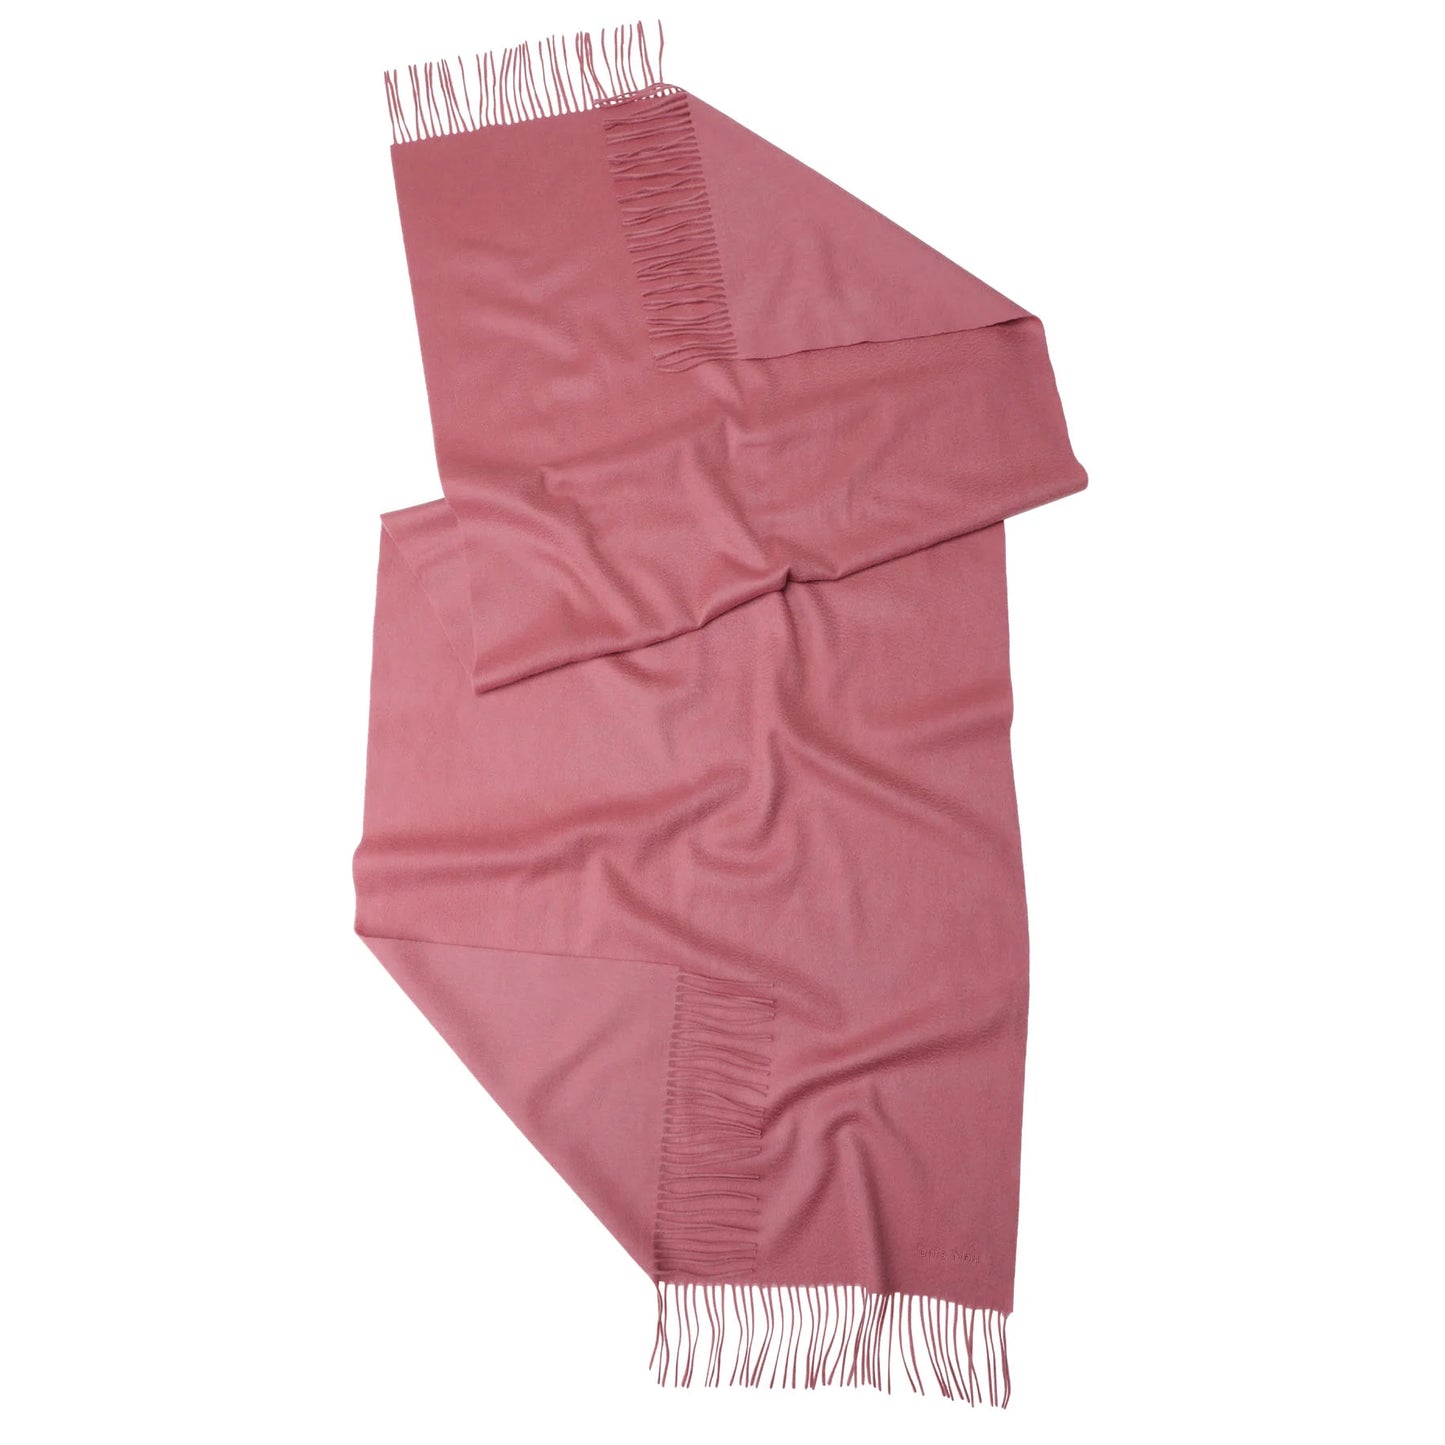 Tørklæde - Uldtørklæde, Lyserød